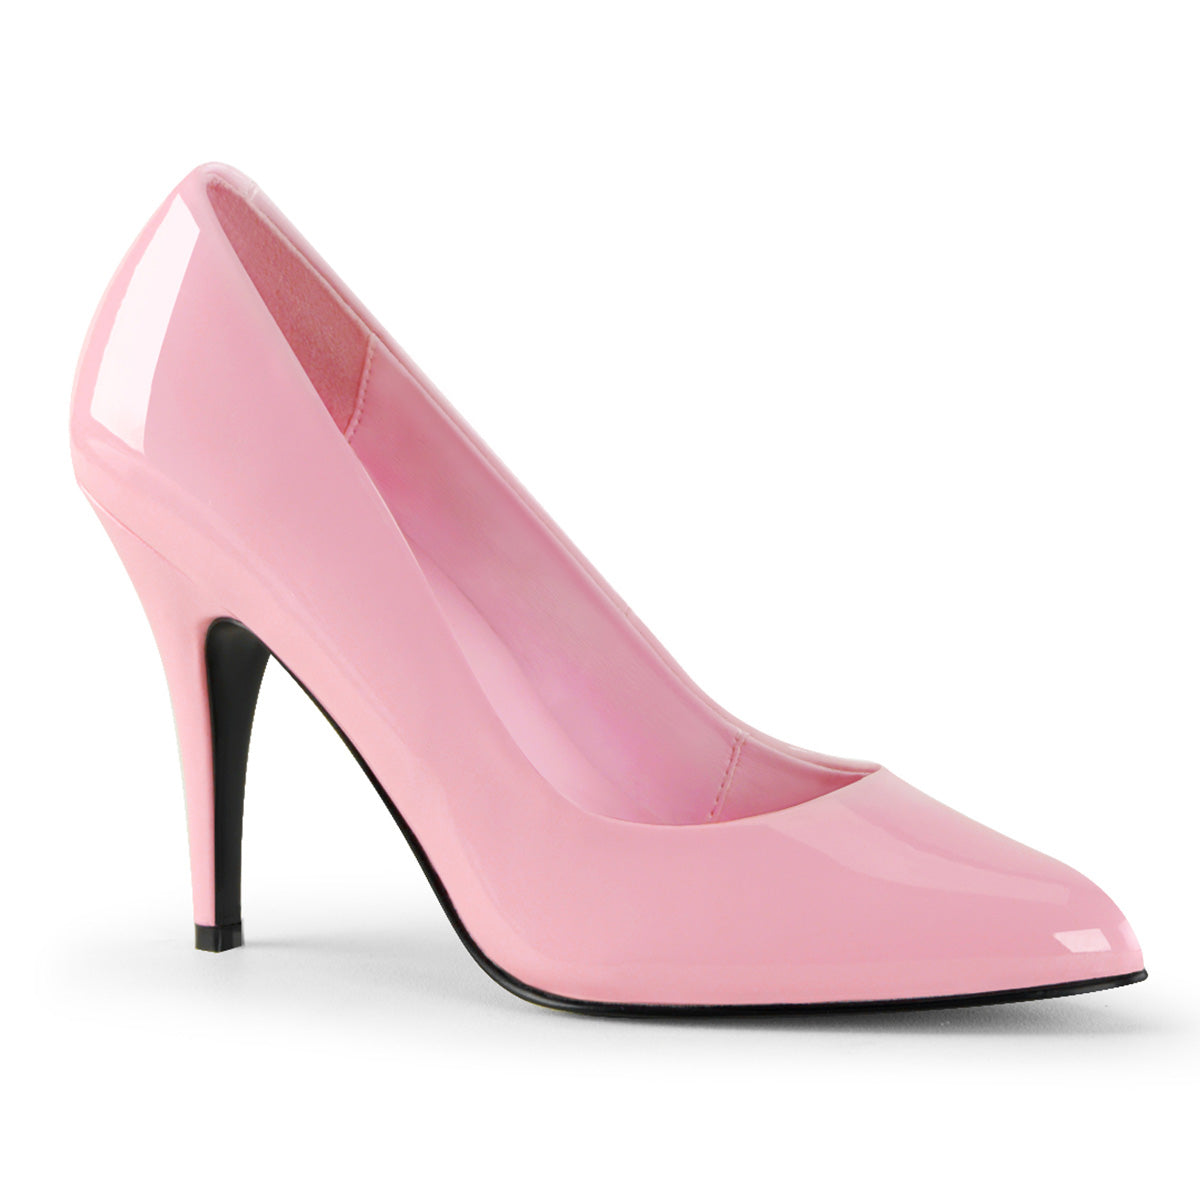 VANITY-420 Pleaser Shoes 4" Heel Baby Pink Fetish Footwear-Pleaser- Sexy Shoes